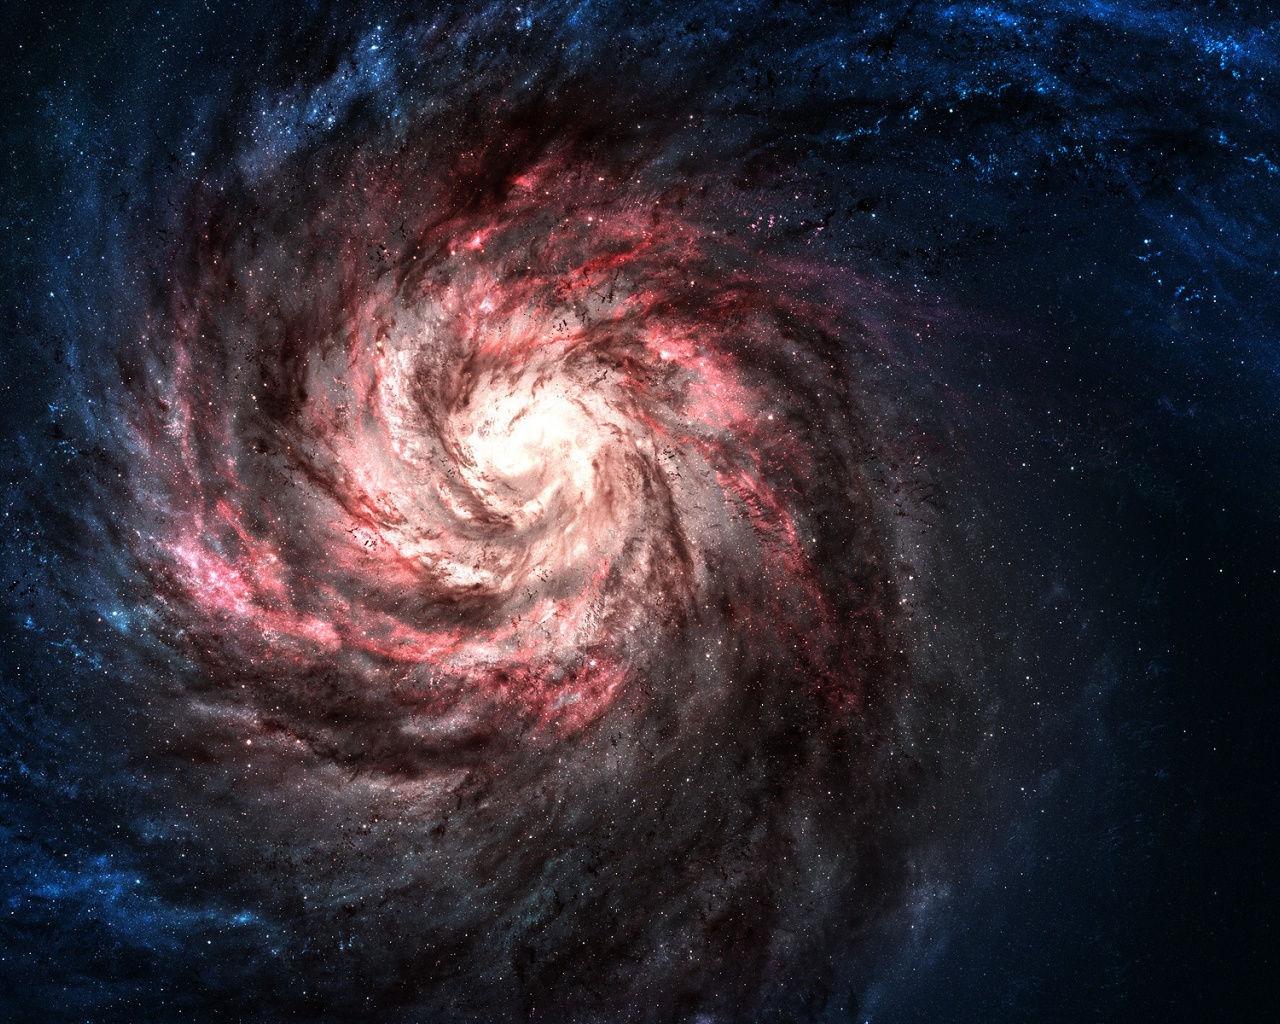 Space Galaxy 5